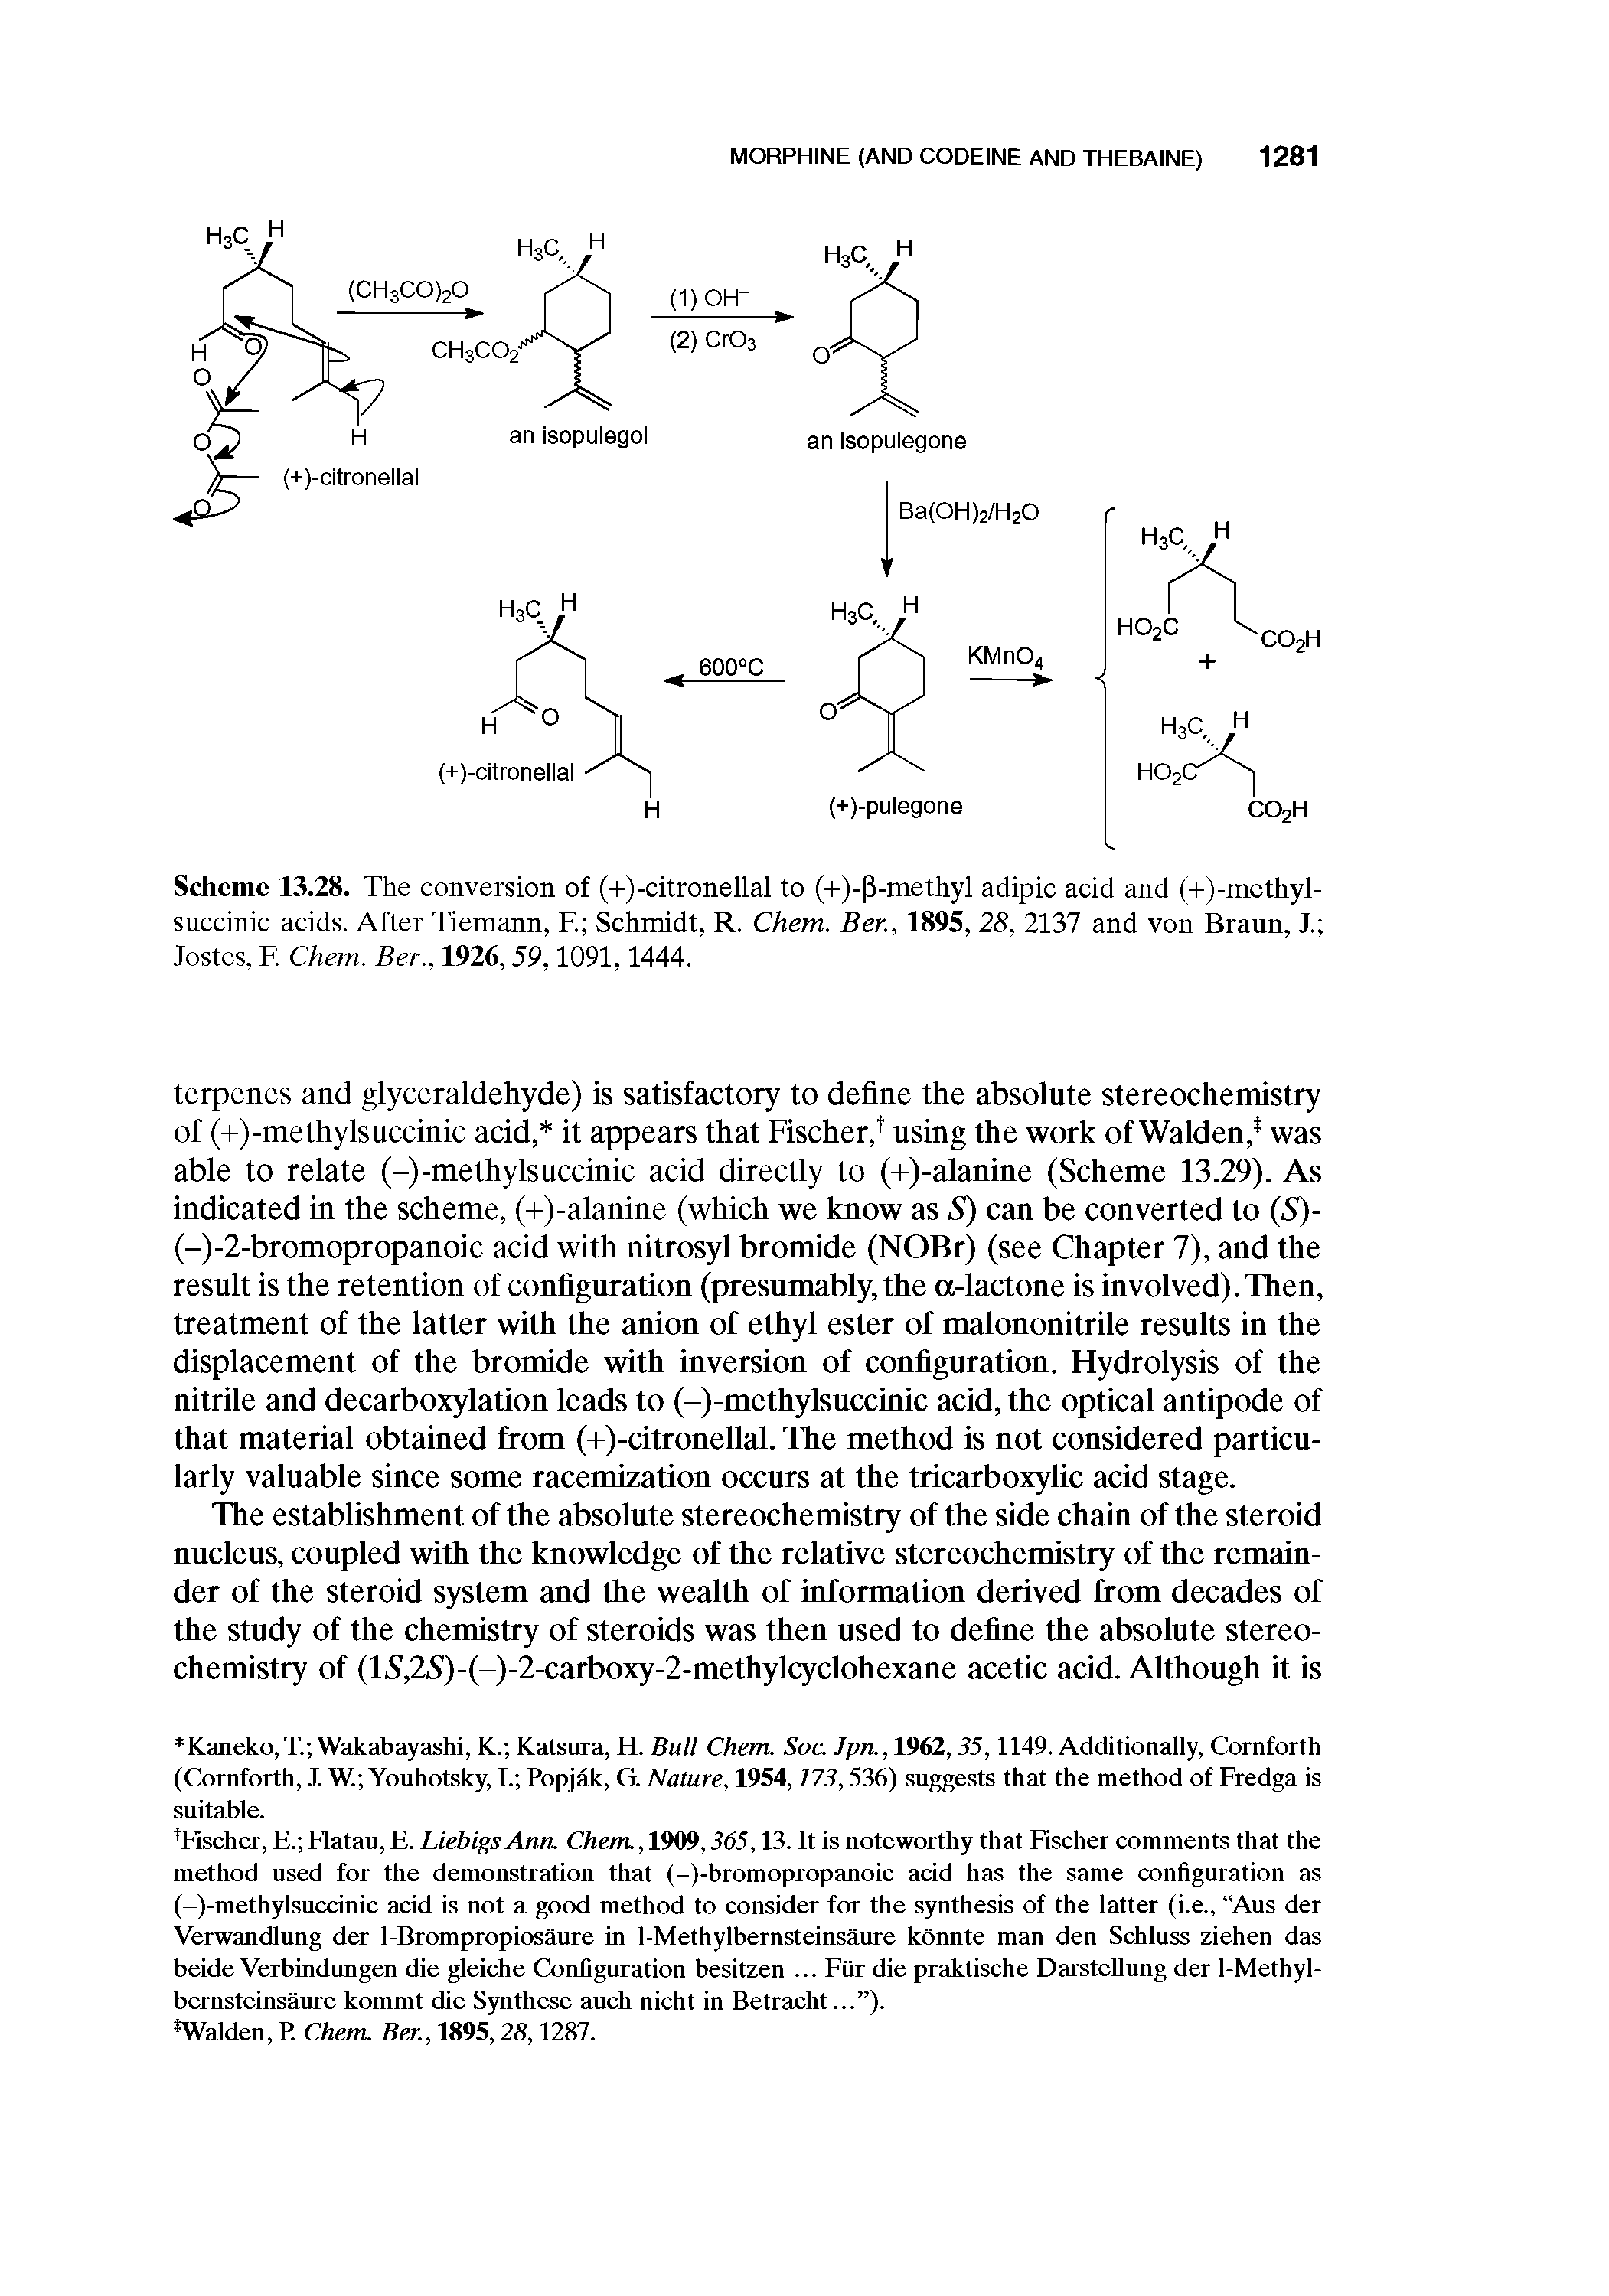 Scheme 13.28. The conversion of (+)-citronellal to (+)- 3-methyl adipic acid and (+)-methyl-succinic acids. After Tiemann, E Schmidt, R. Chem. Ber., 1895,28, 2137 and von Braun, X Jostes, F. Chem. Ber., 1926,59,1091,1444.